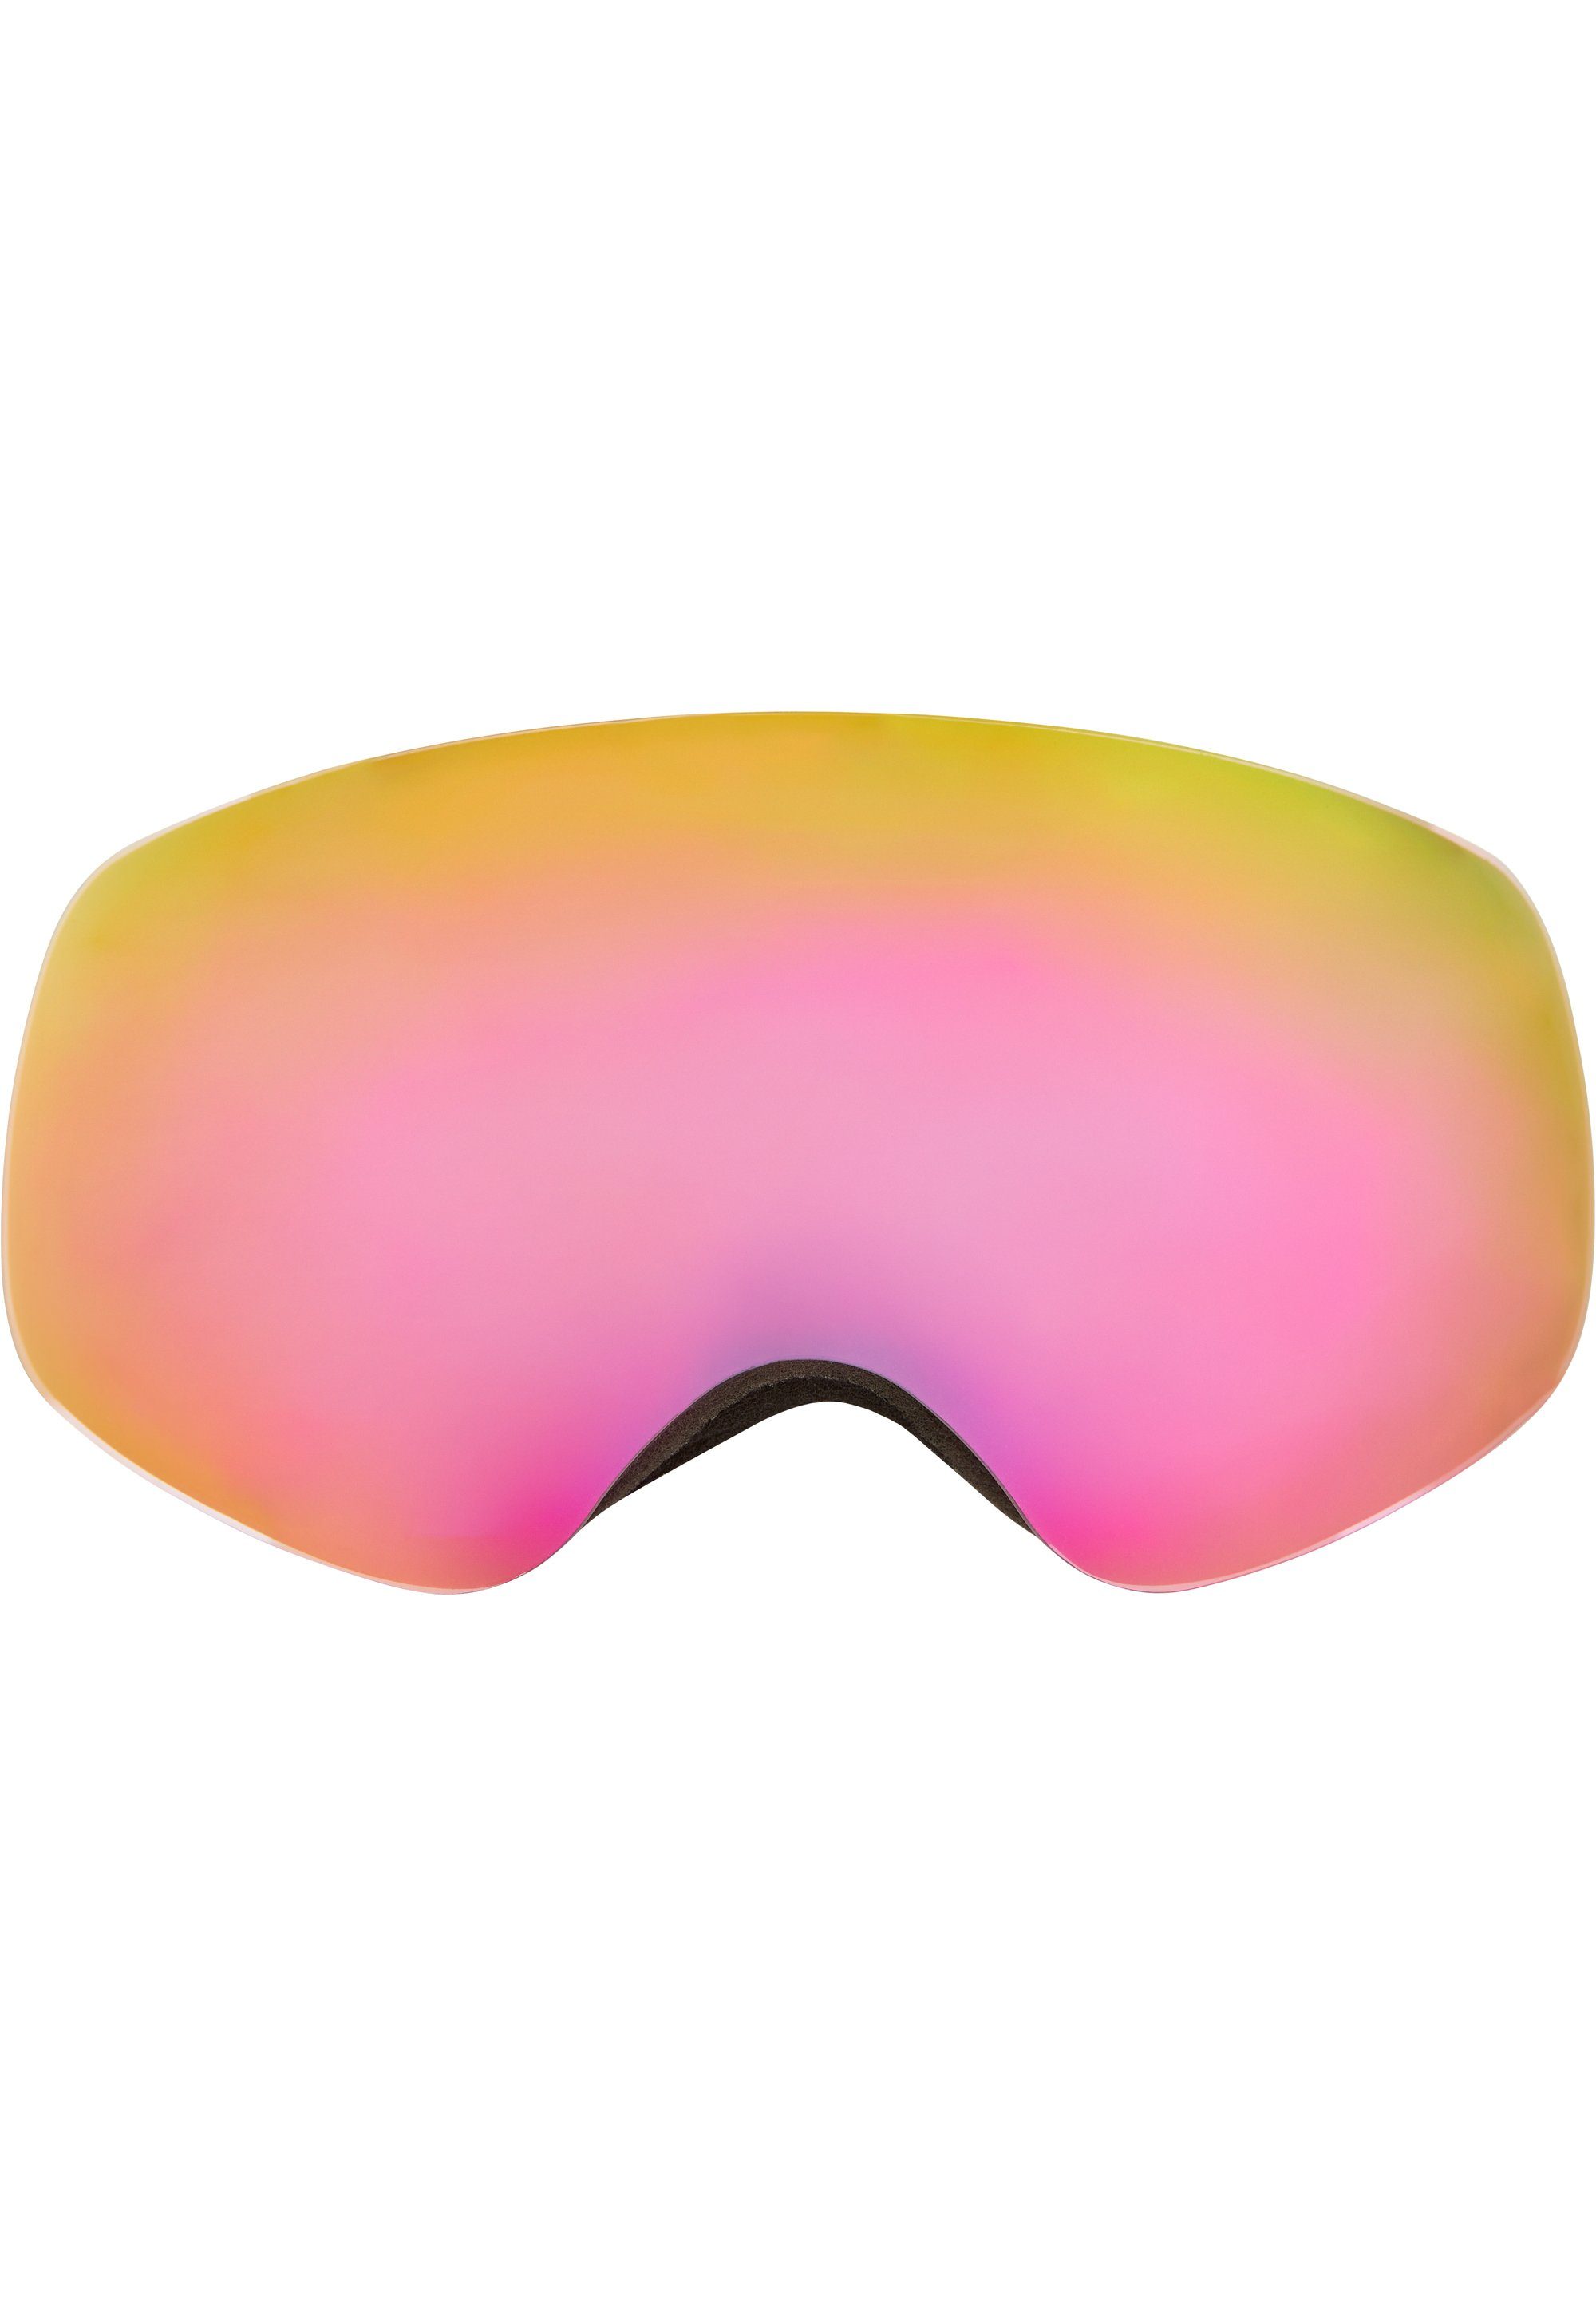 WHISTLER Skibrille WS900 Jr., im rahmenlosen Design